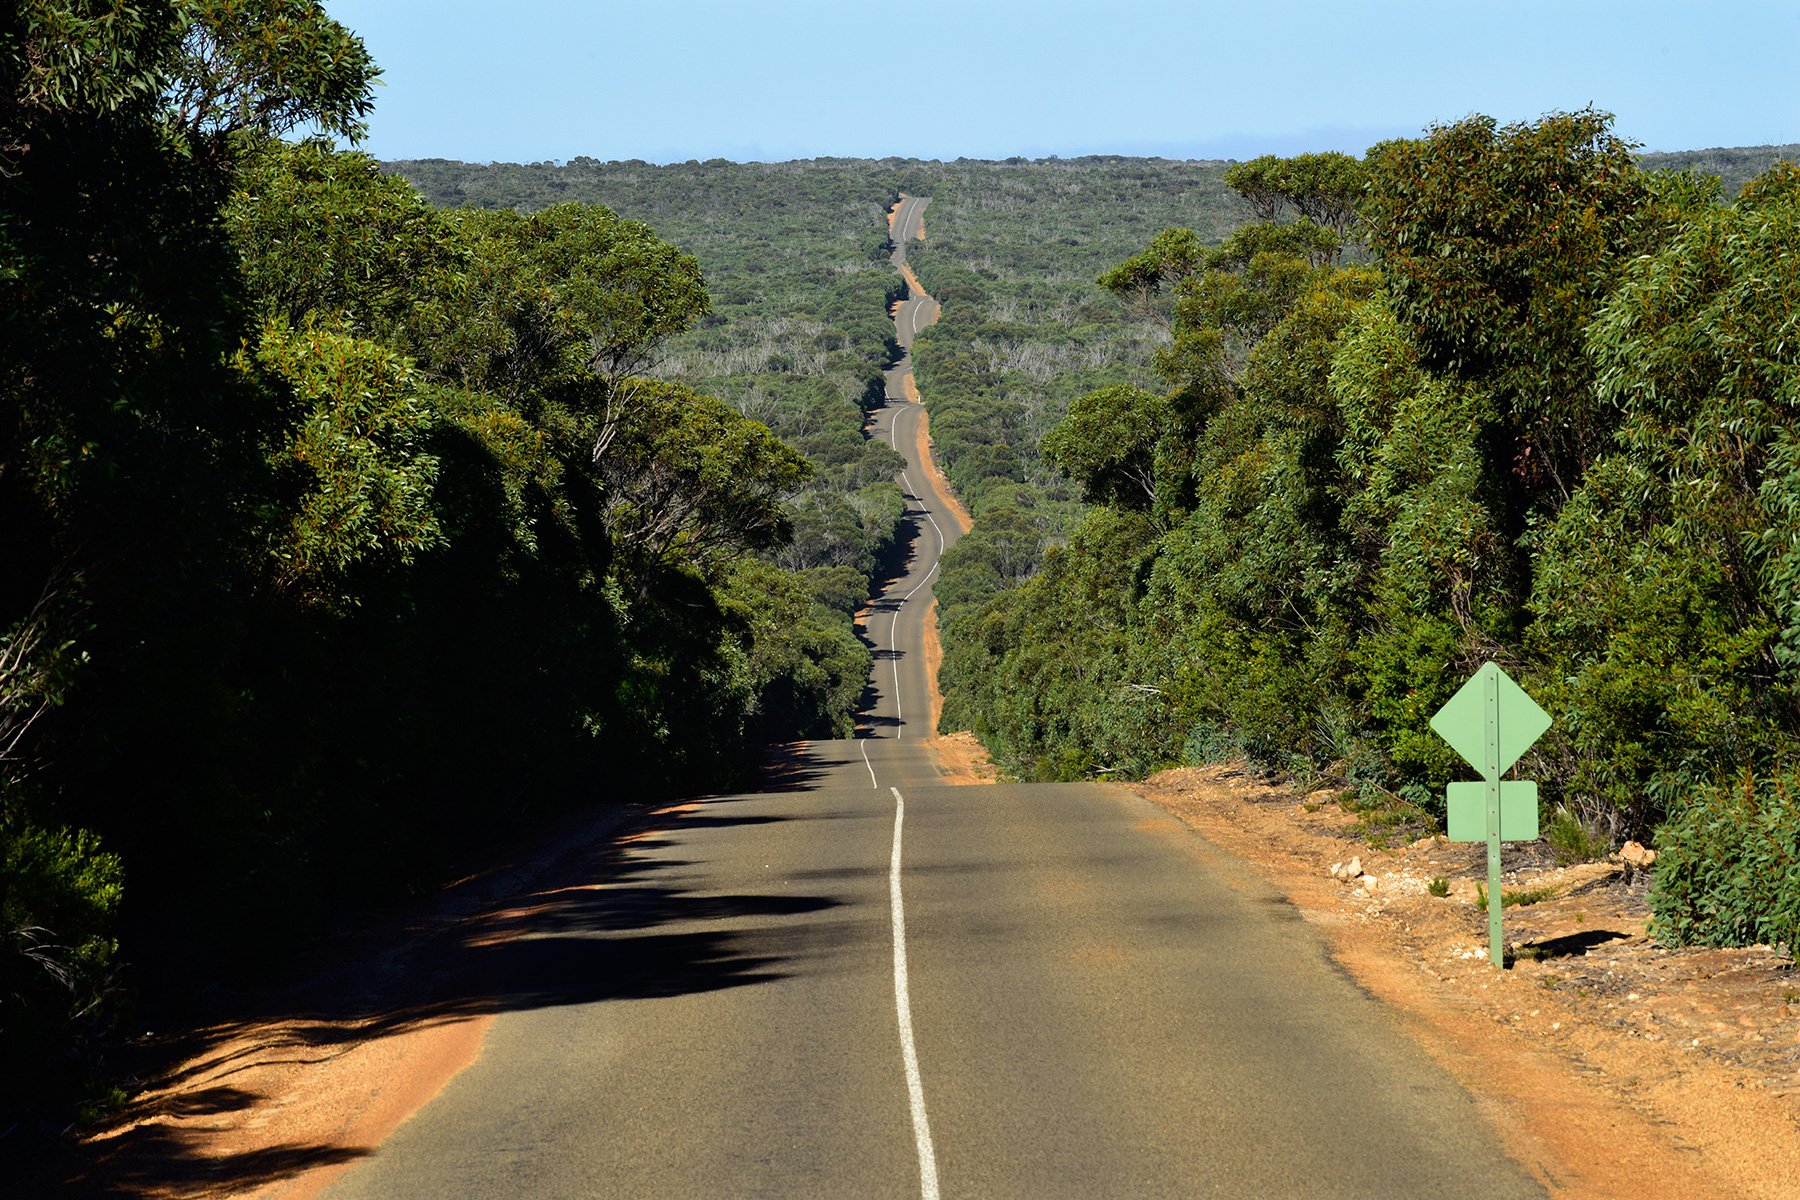 Kangaroo Island (South Australia, Australie) - Flinders Chase National Park : route menant à Remarkable Rocks